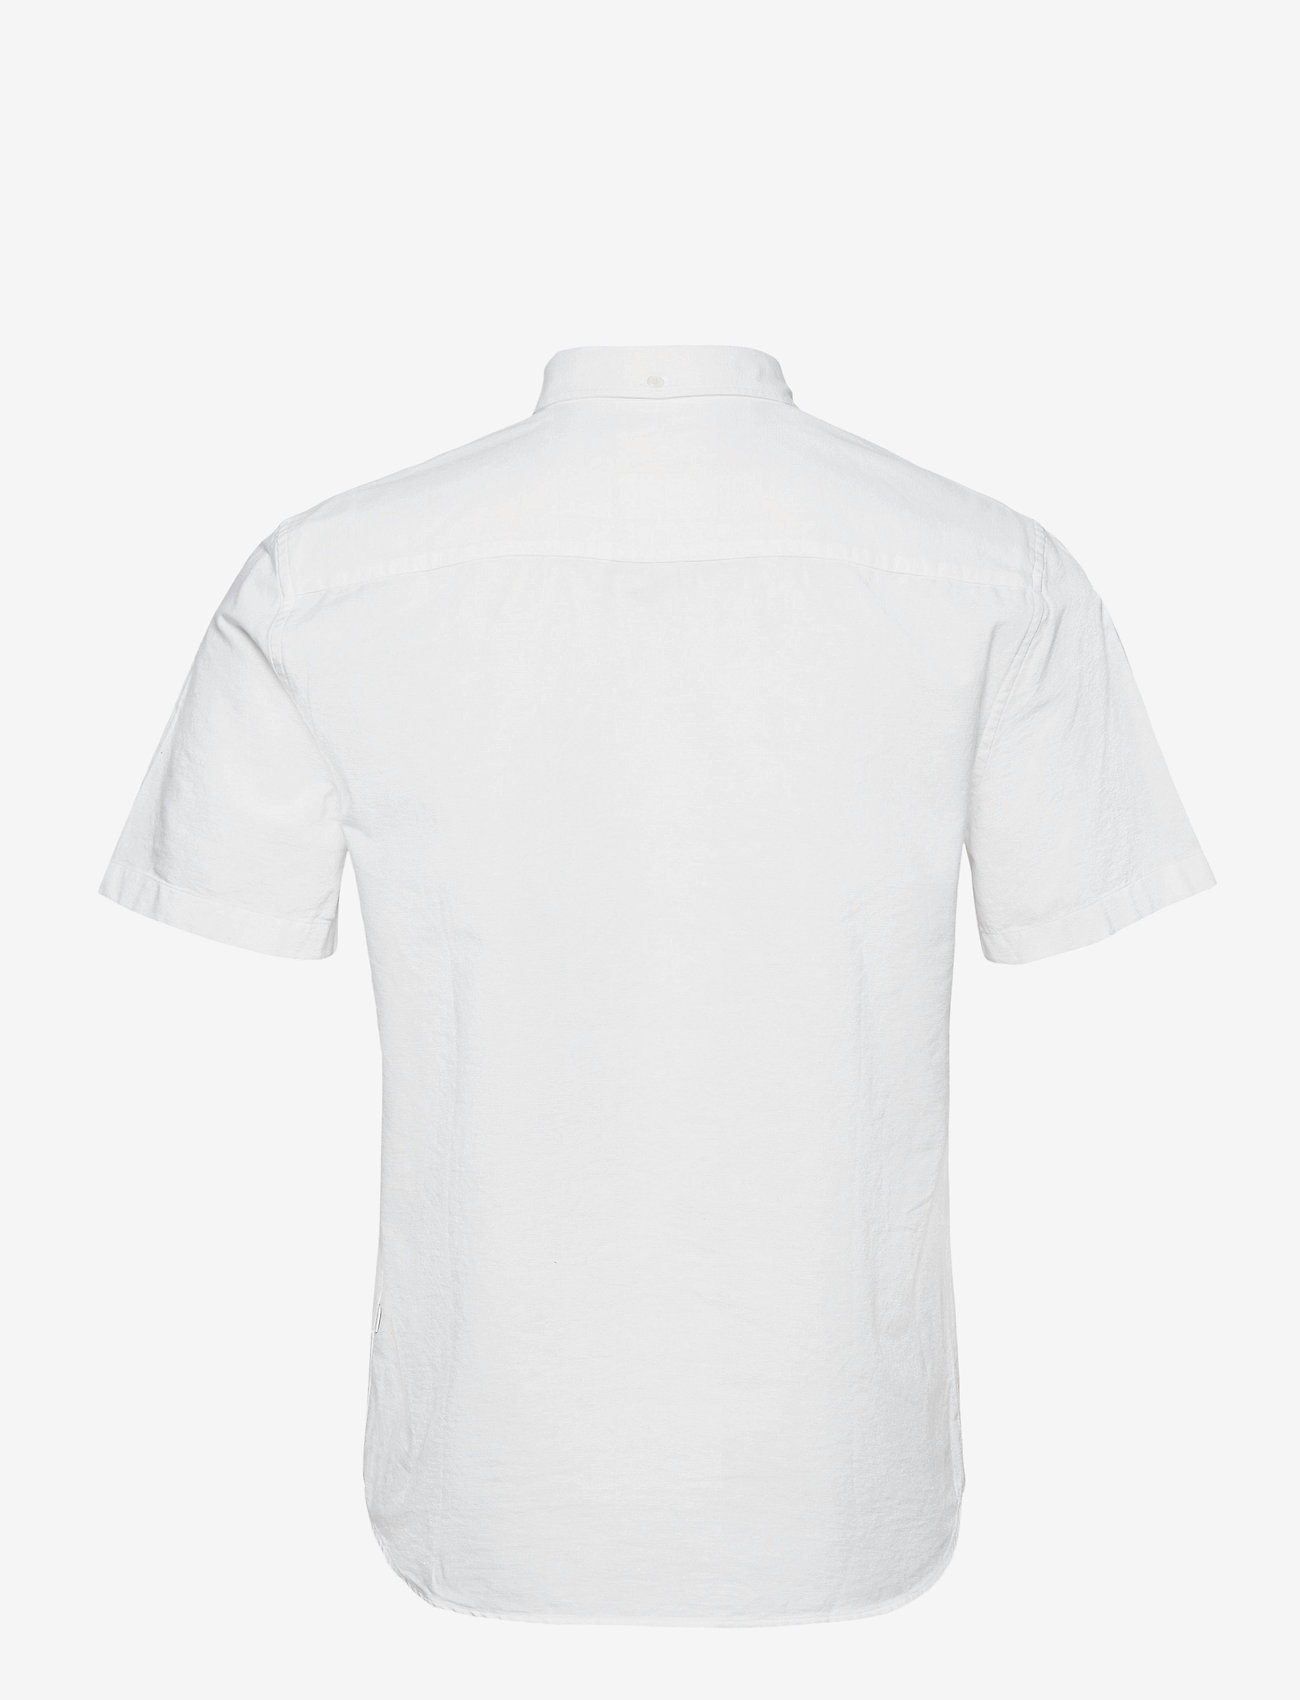 Wood Wood - Michael oxford shirt SS - kurzärmelig - bright white - 1